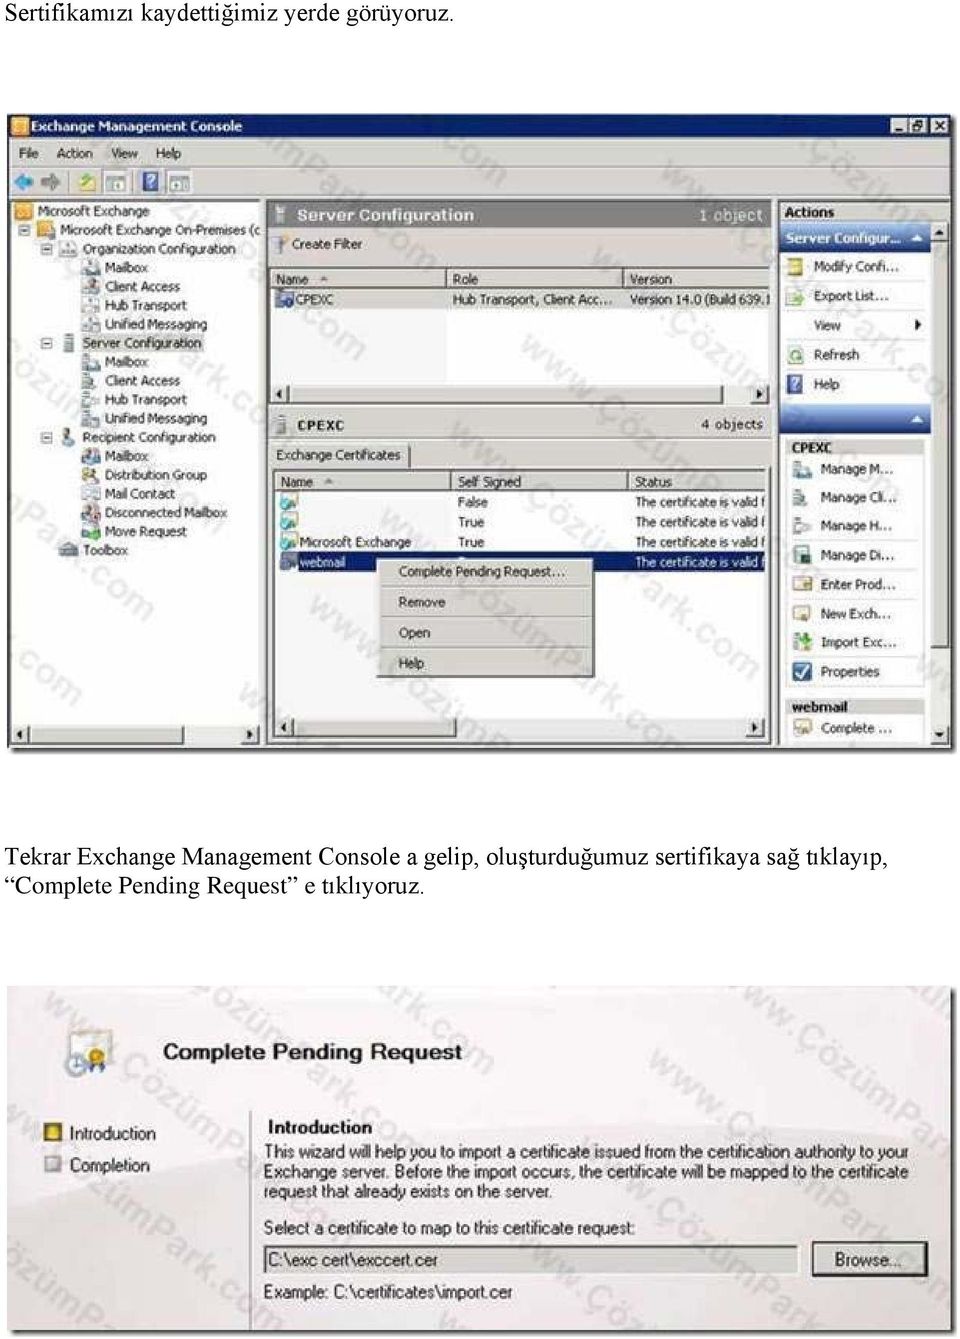 Tekrar Exchange Management Console a